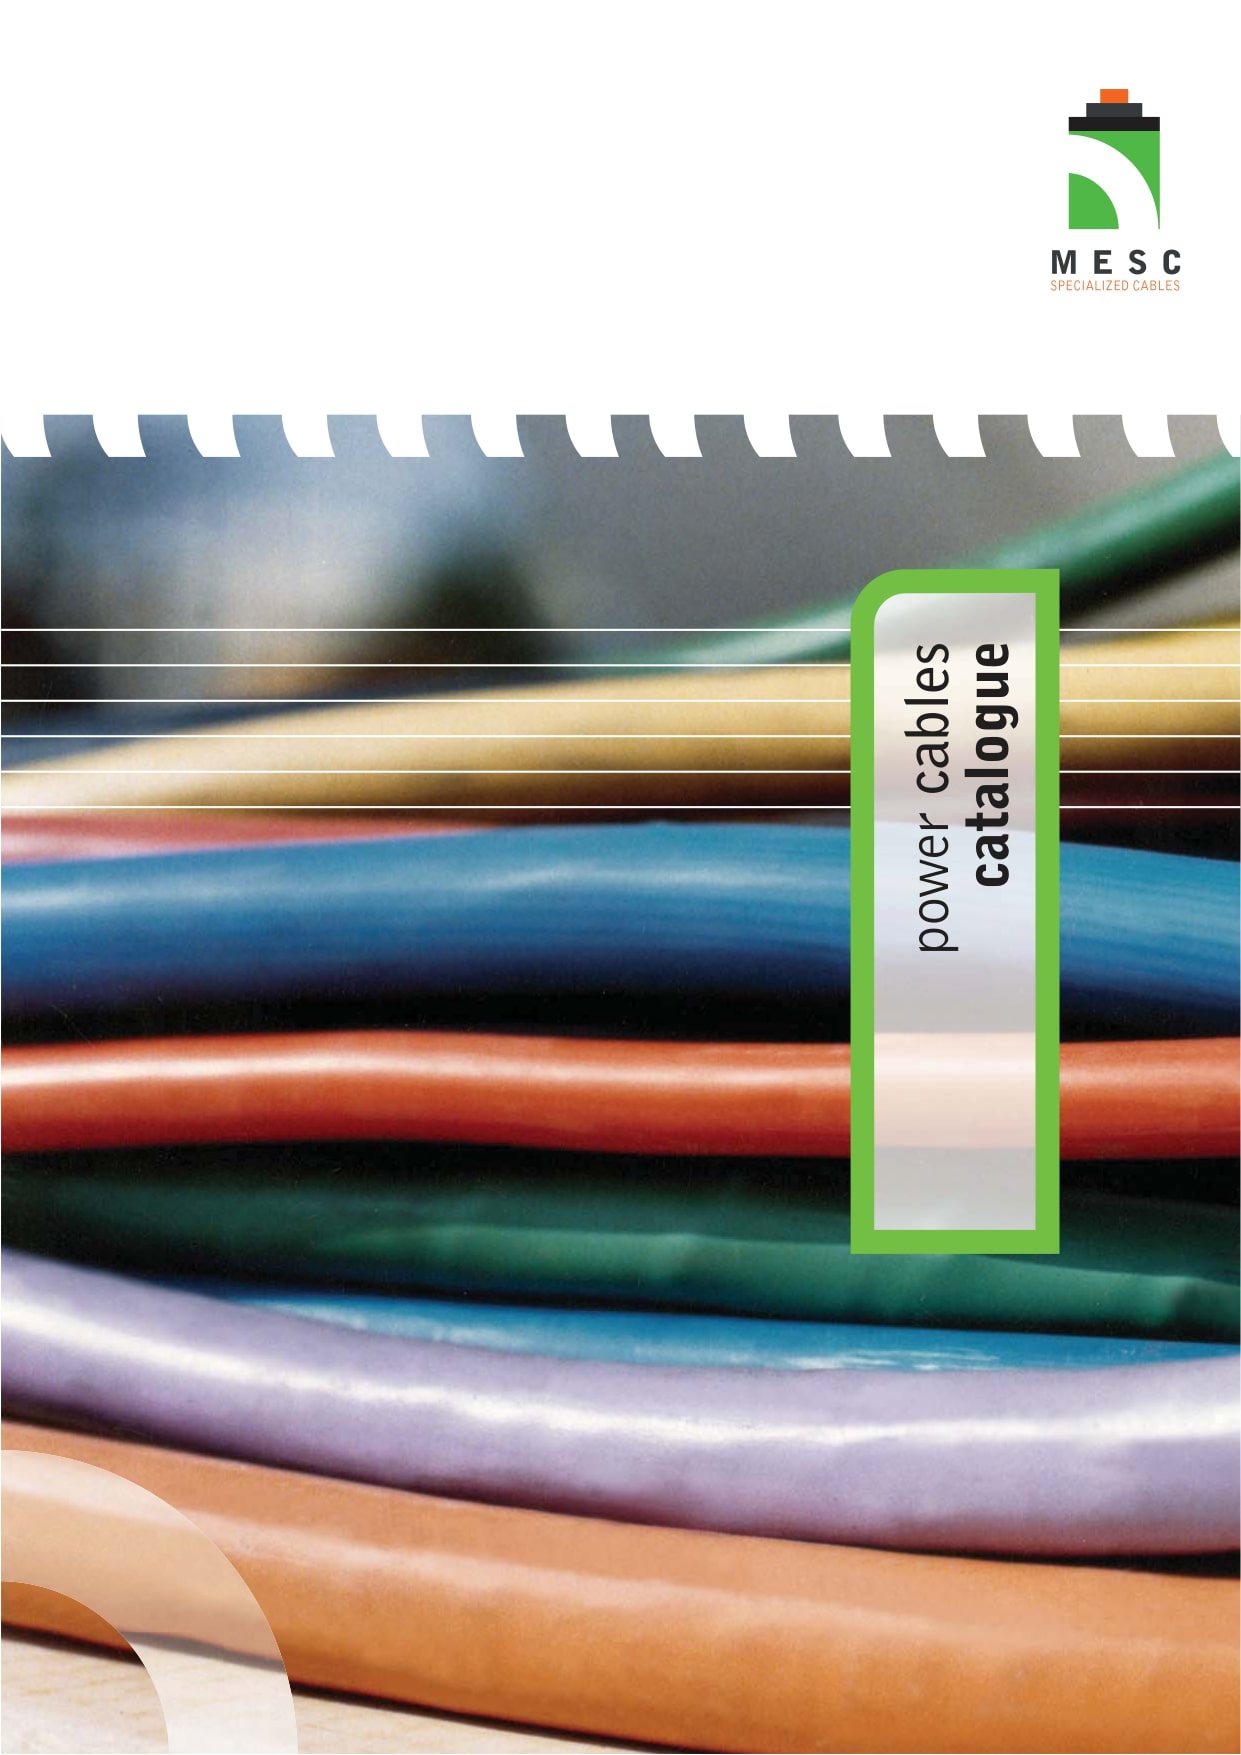 MESC Power Cables Catalogue